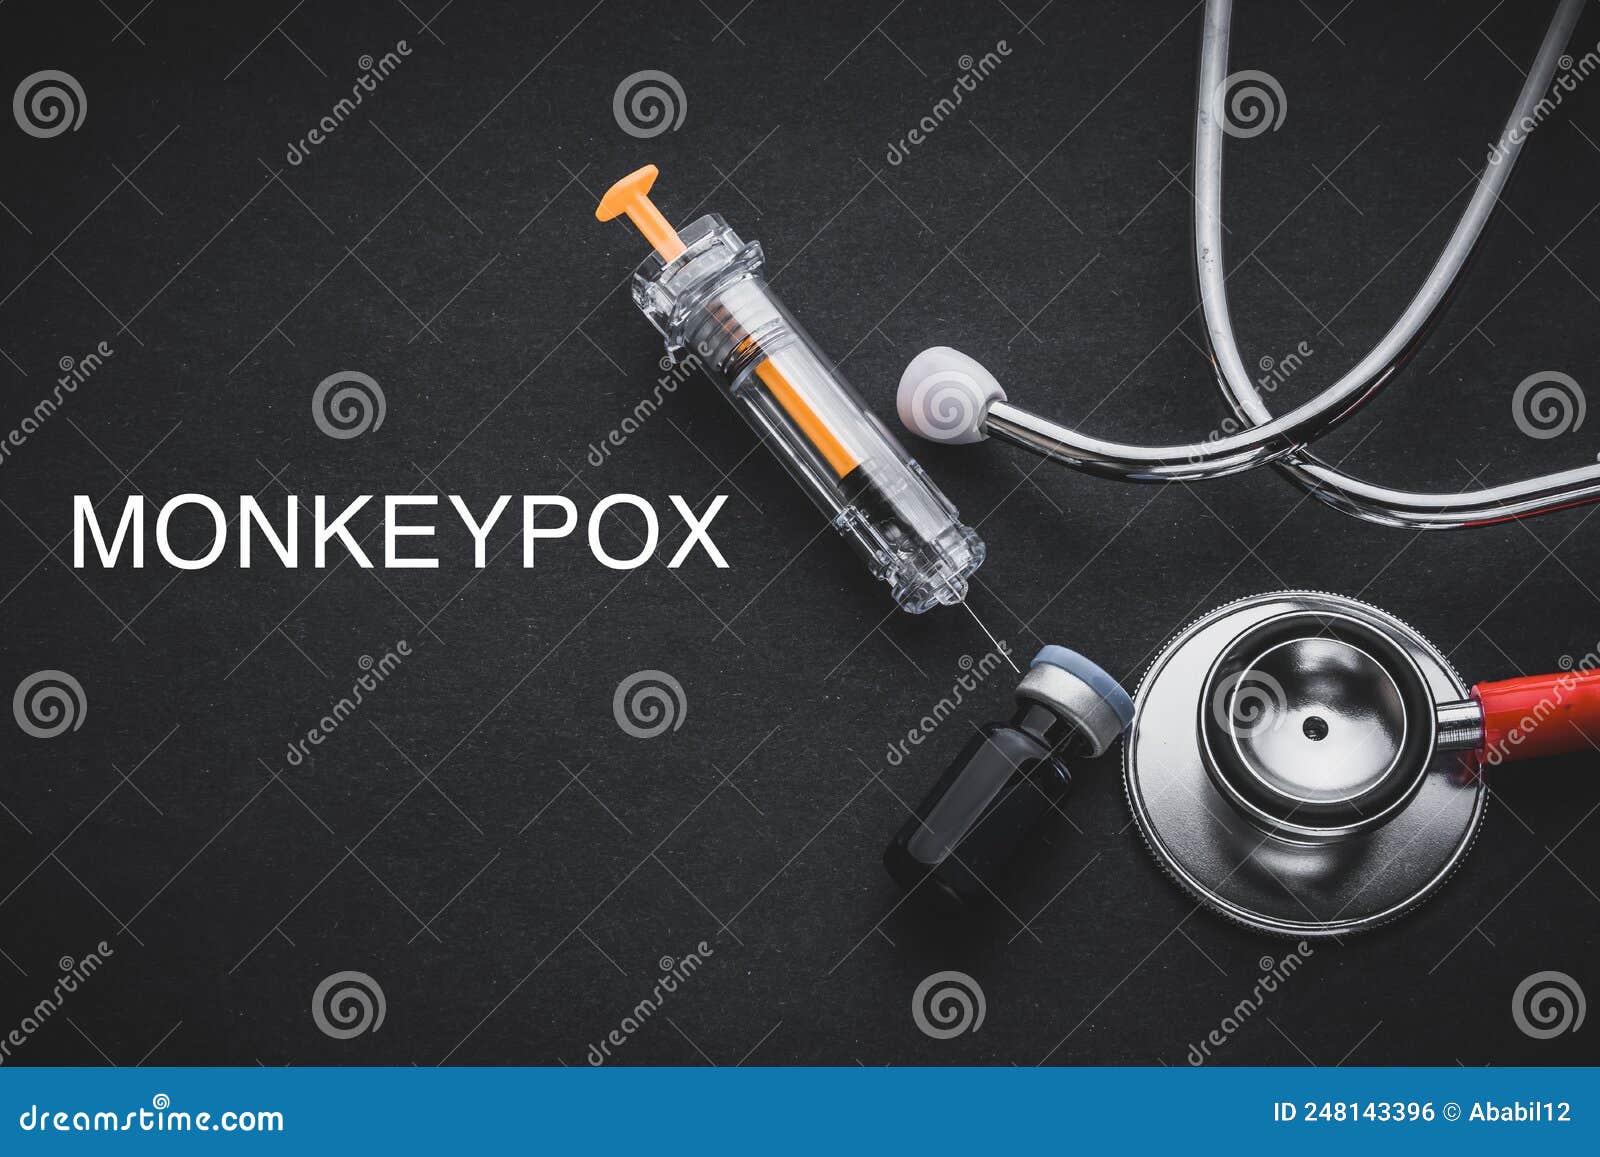 monkeypox words written with stethoscope, syringe, glove and vaccine bottle on black background.